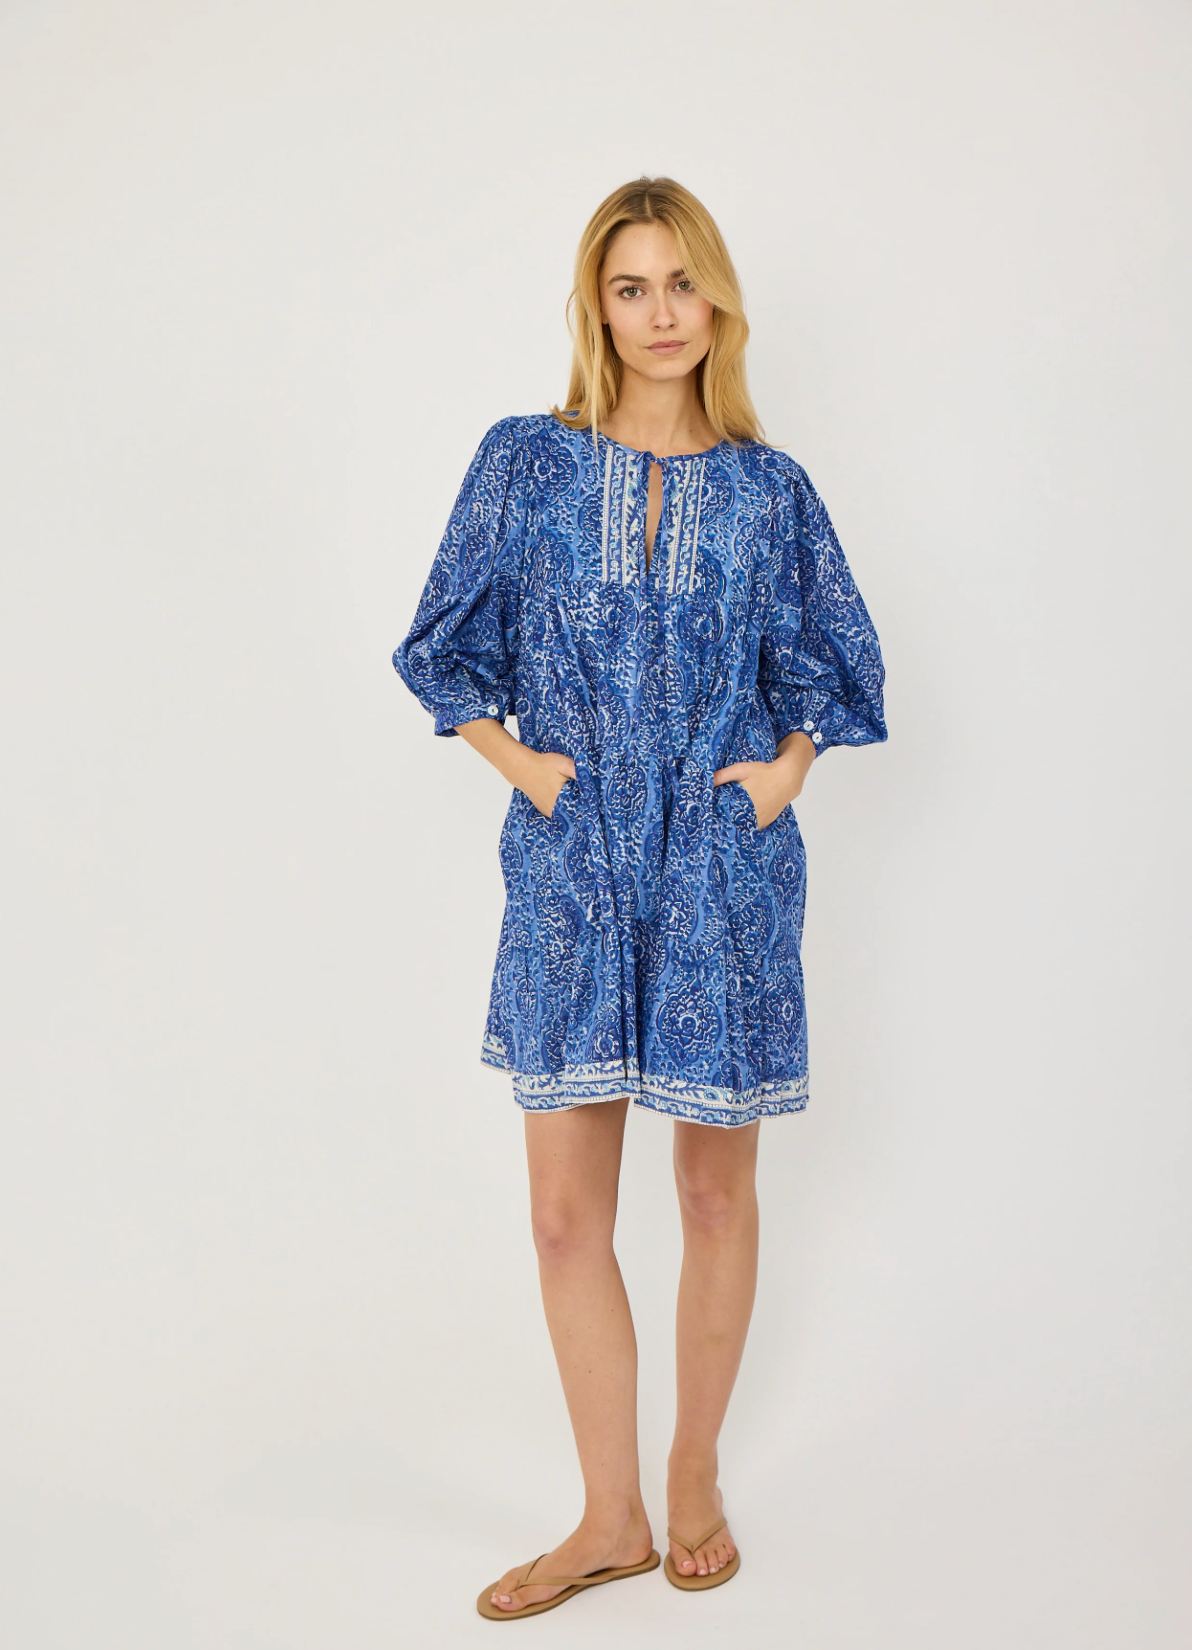 Marea by Liz Joy Casita Dress Blue Multi